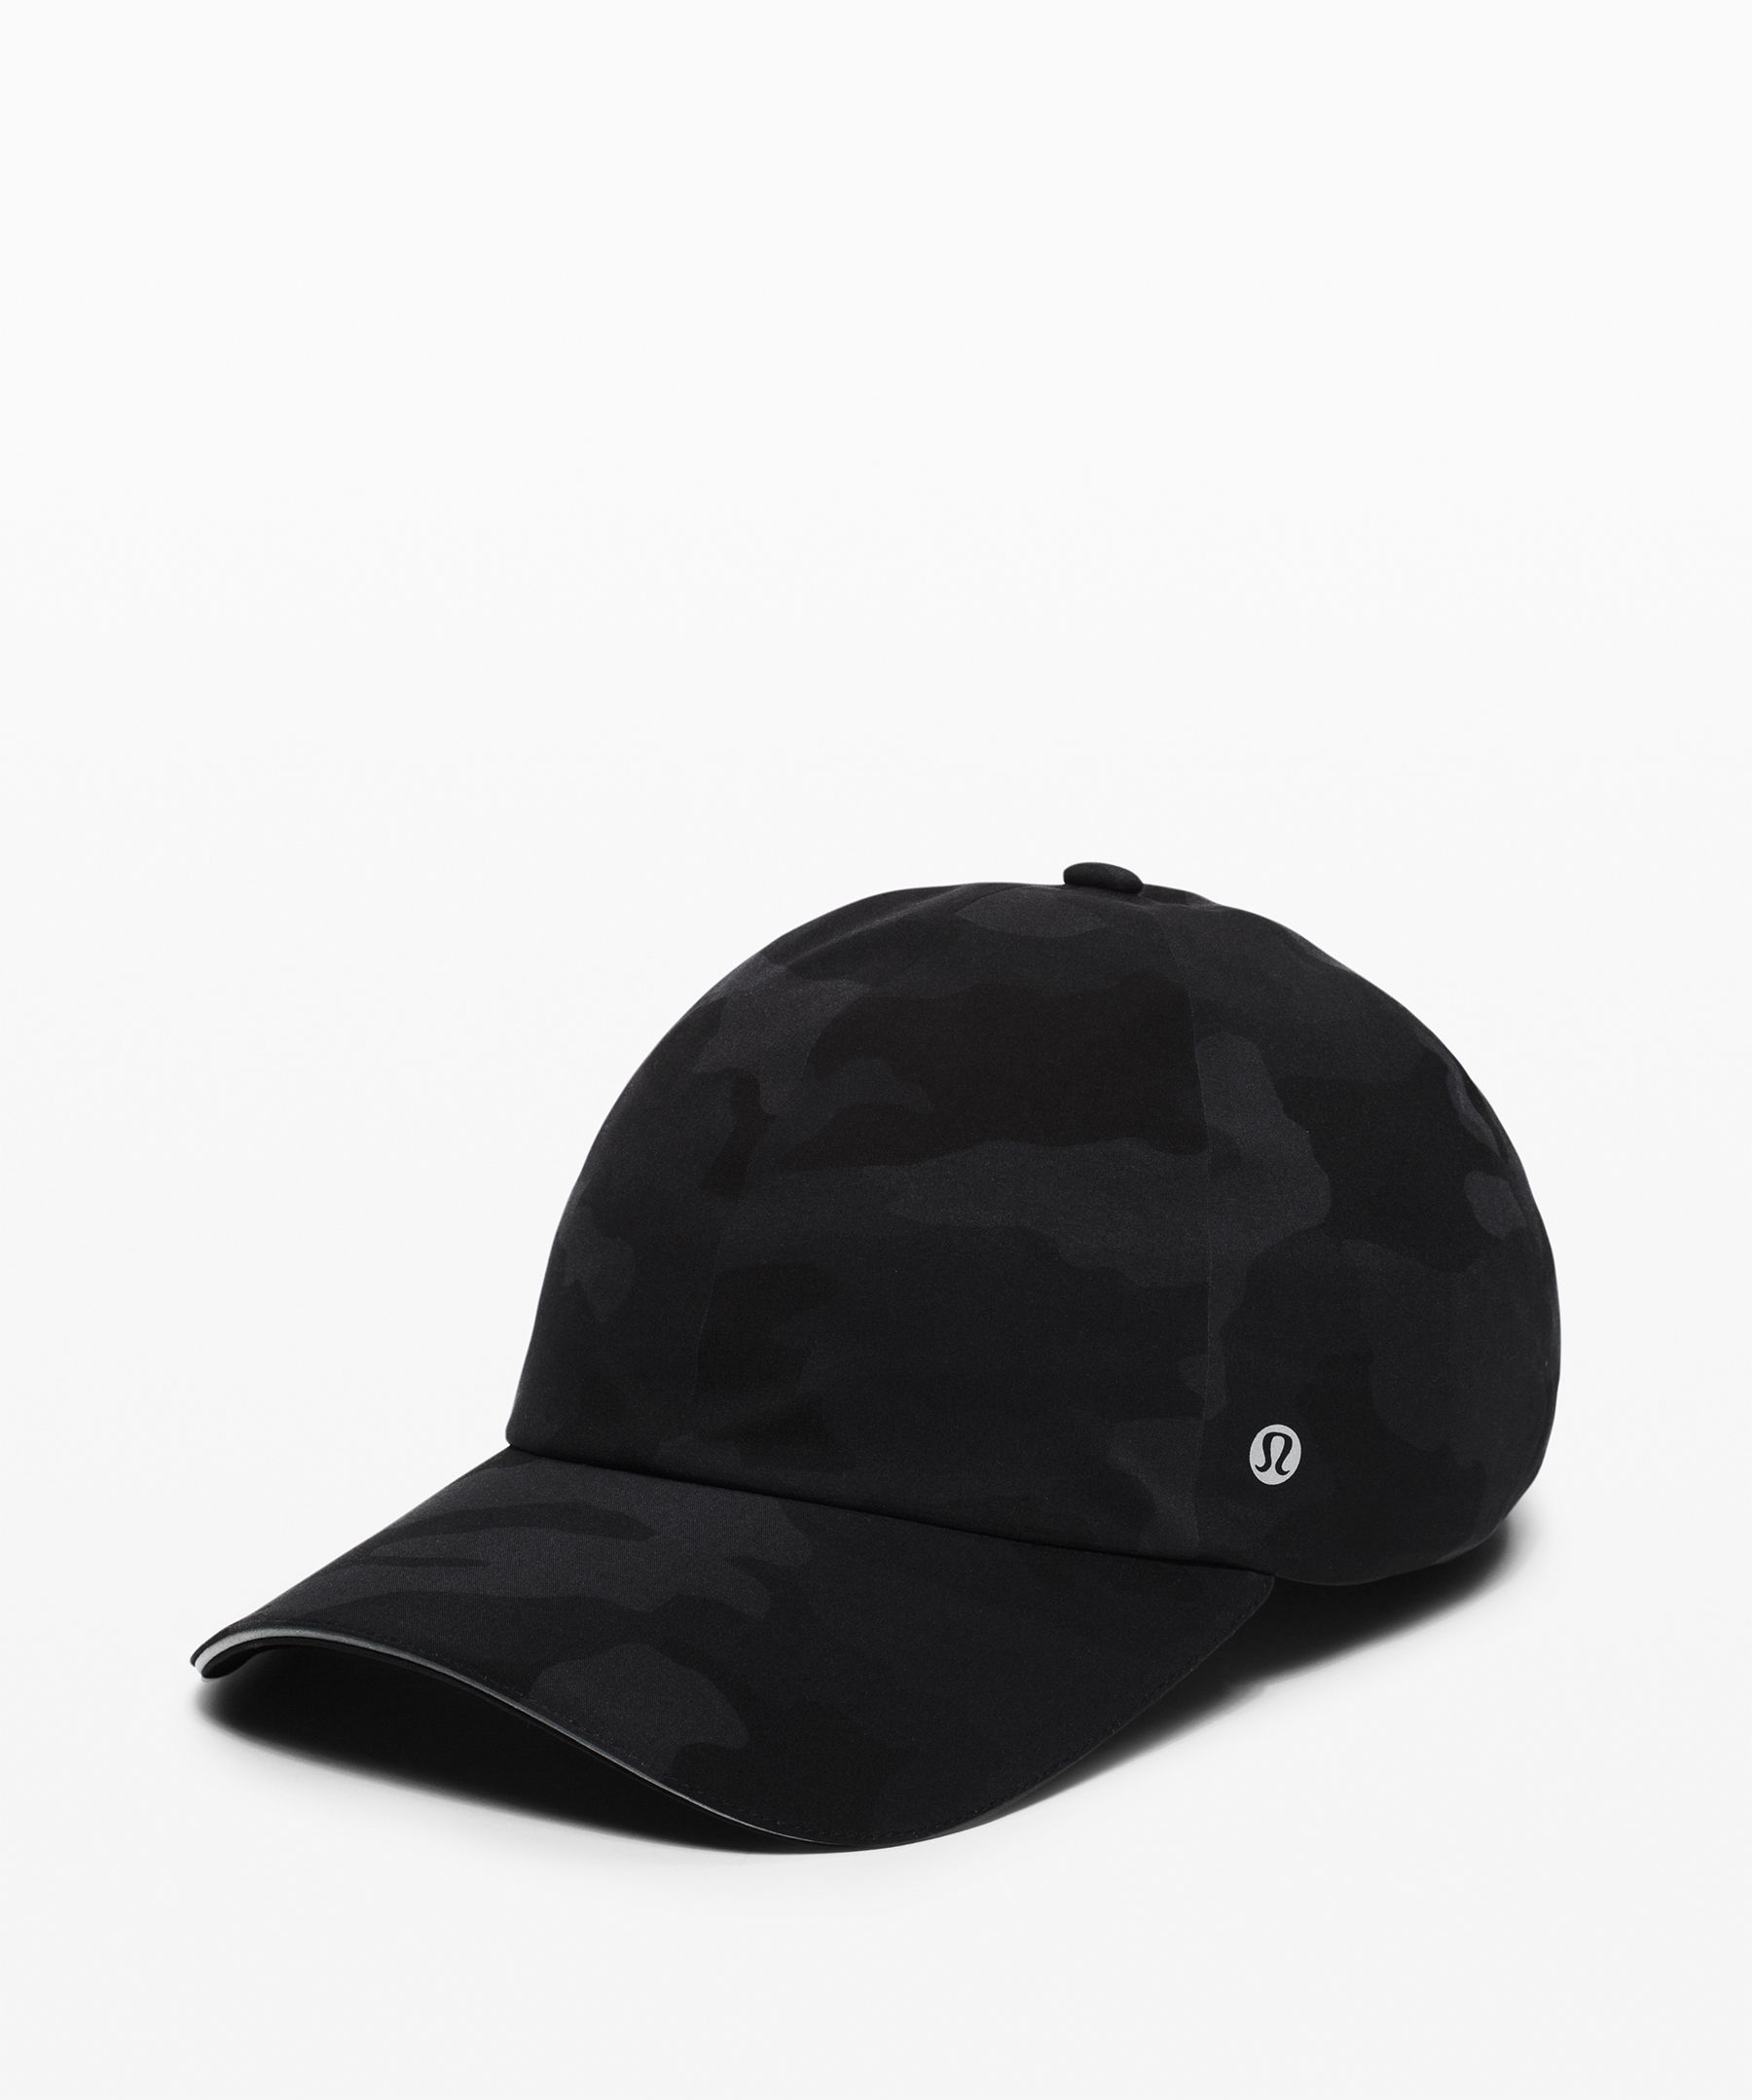 lululemon black cap